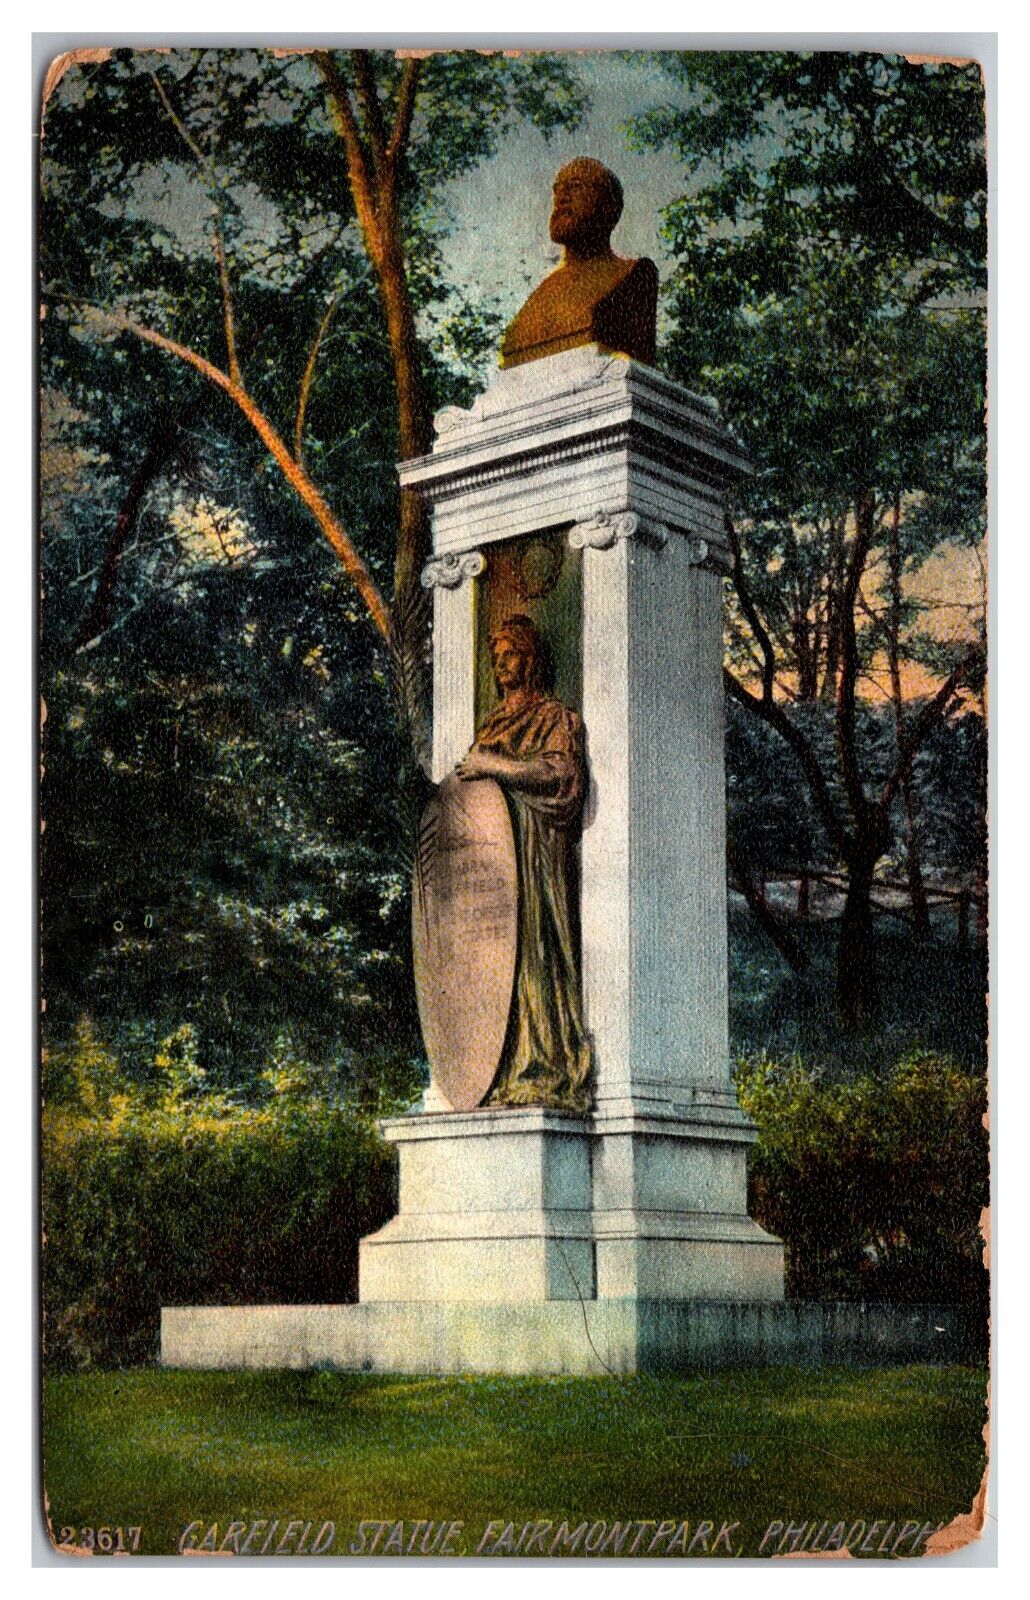 Garfield Statue, Fairmount Park, Philadelphia, Pennsylvania Postcard